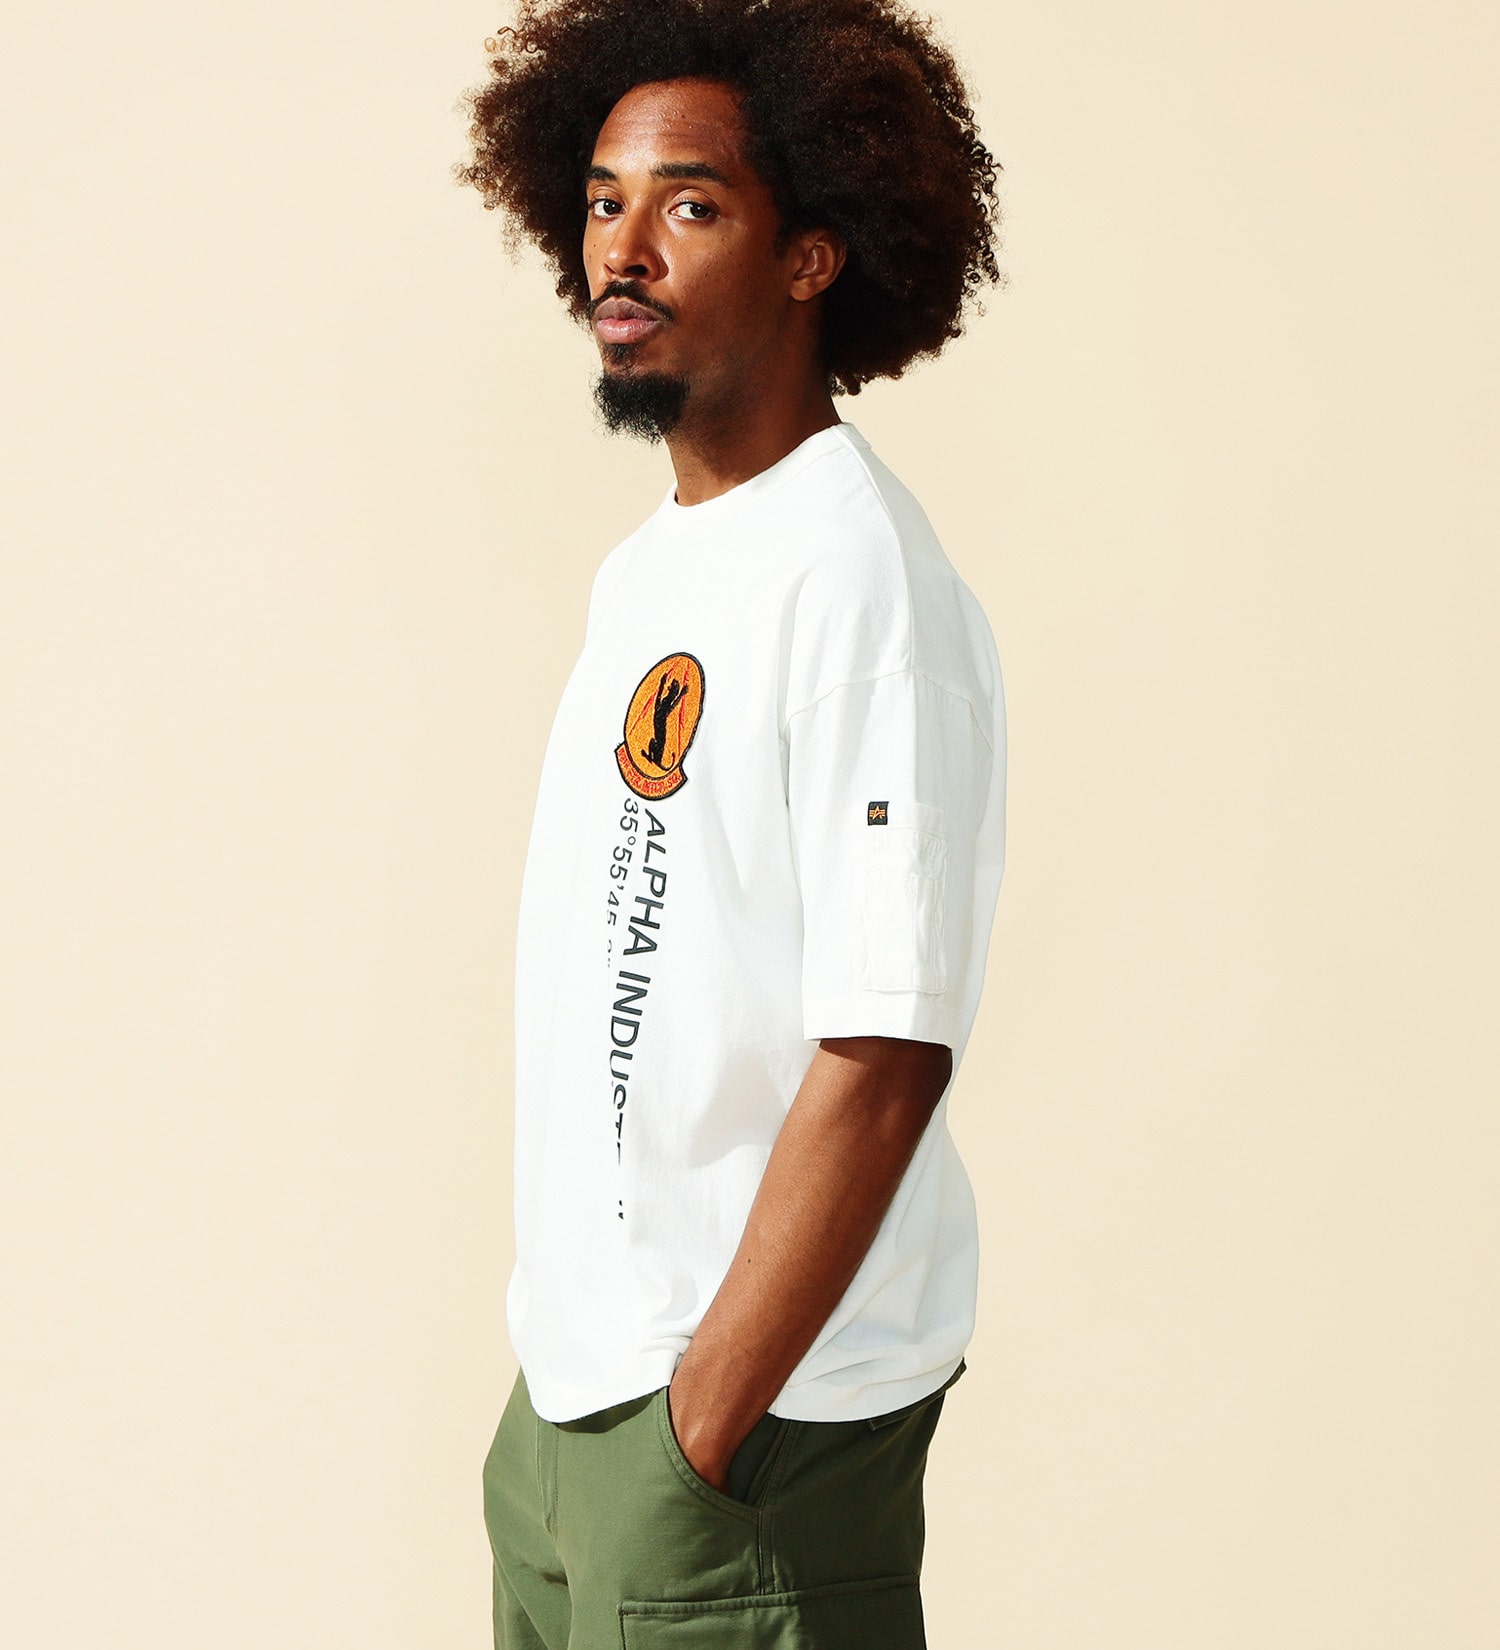 ALPHA(アルファ)のUSAF パッチプリントTシャツ 半袖|トップス/Tシャツ/カットソー/メンズ|ホワイト